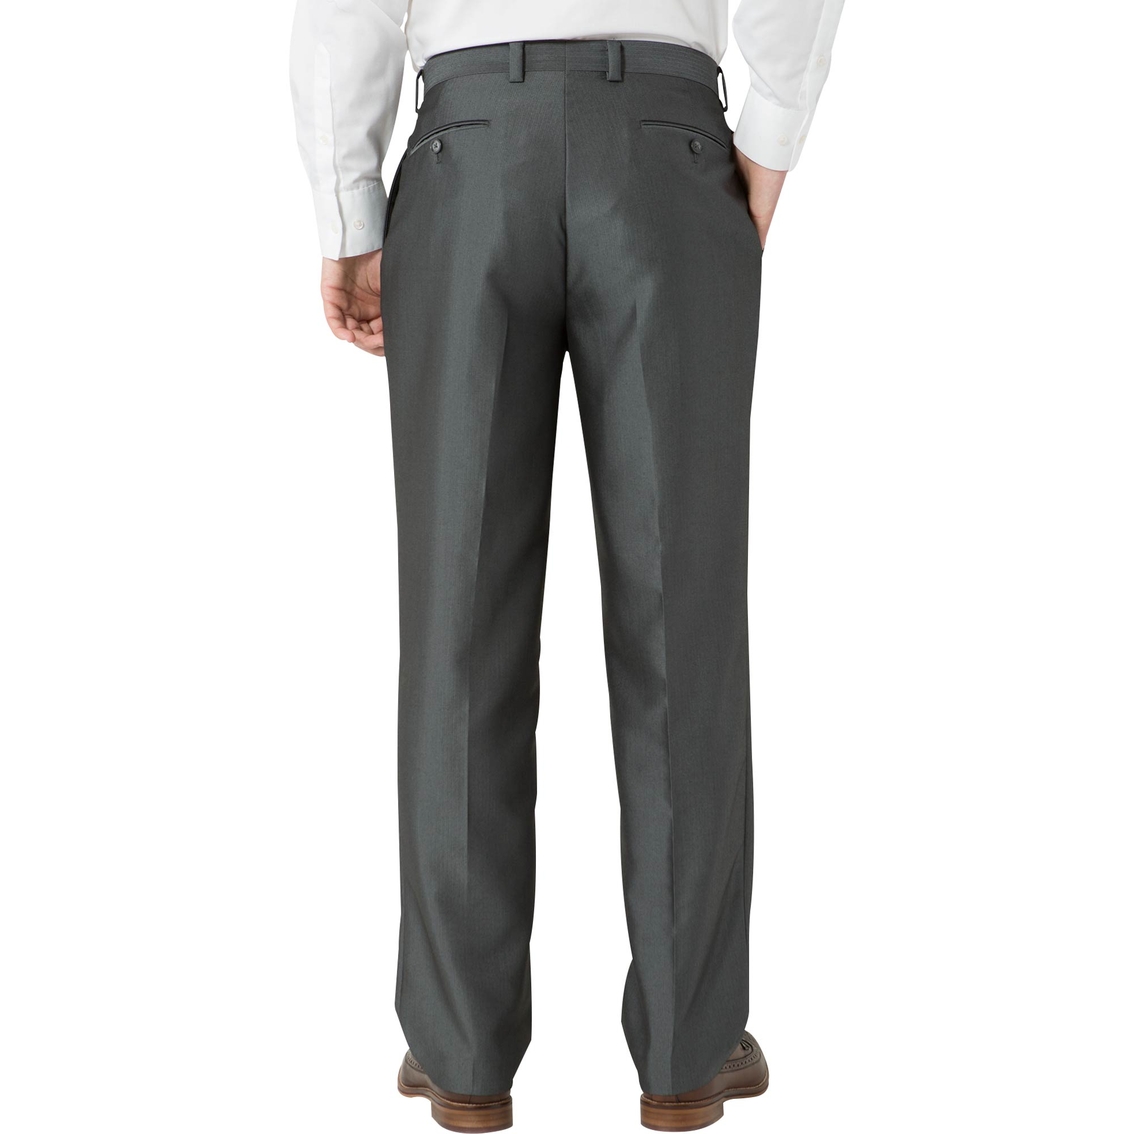 Calvin Klein Suit Separate Pants - Image 2 of 2